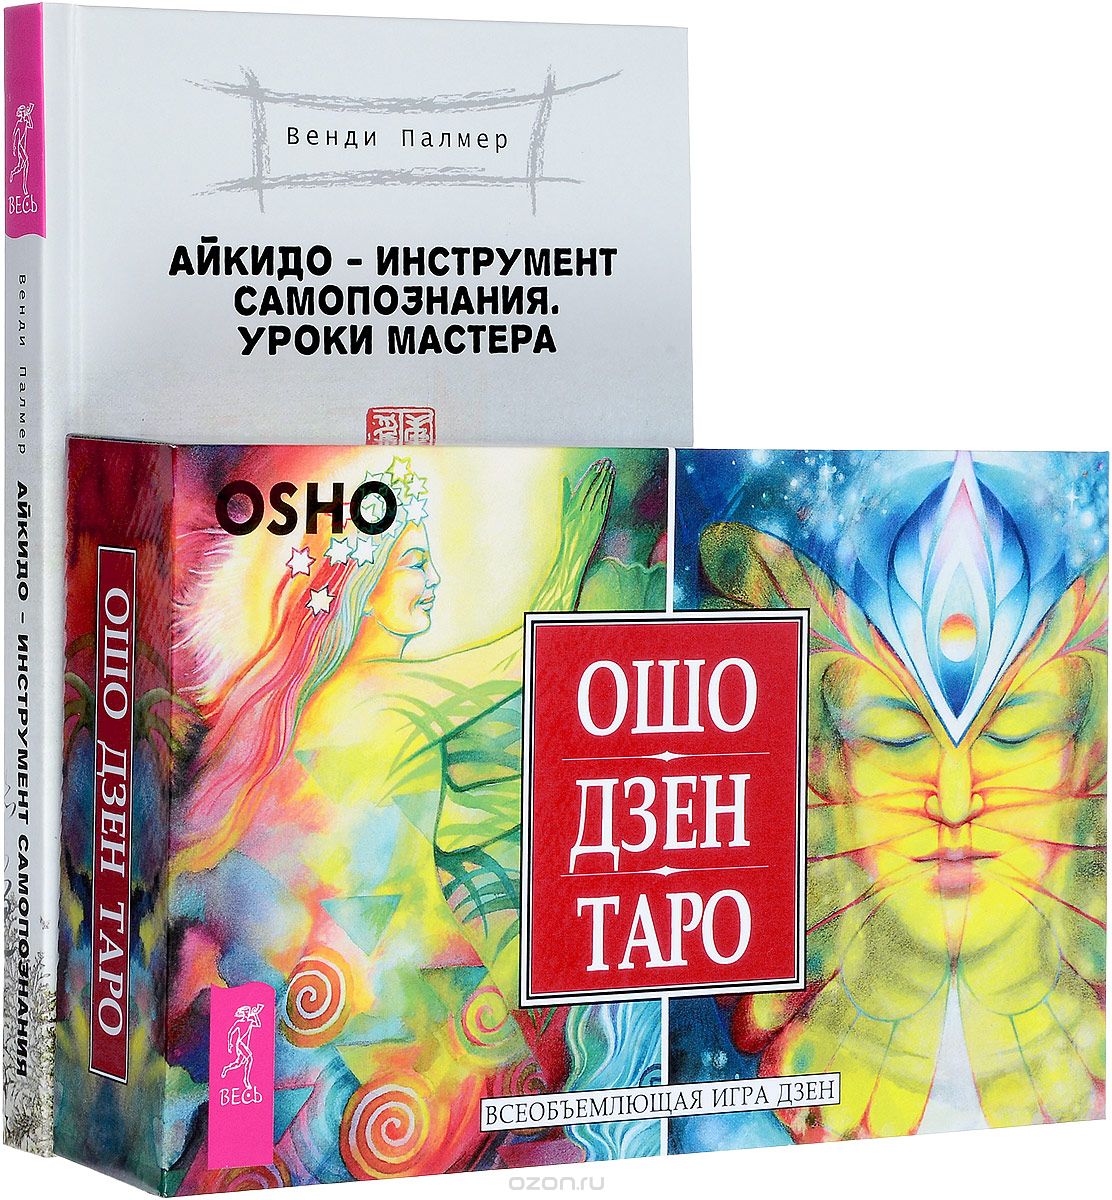 Скачать книгу "Айкидо - инструмент самопознания. Ошо Дзен Таро (комплект из 2 книг + 79 карт), Венди Палмер, Ошо"